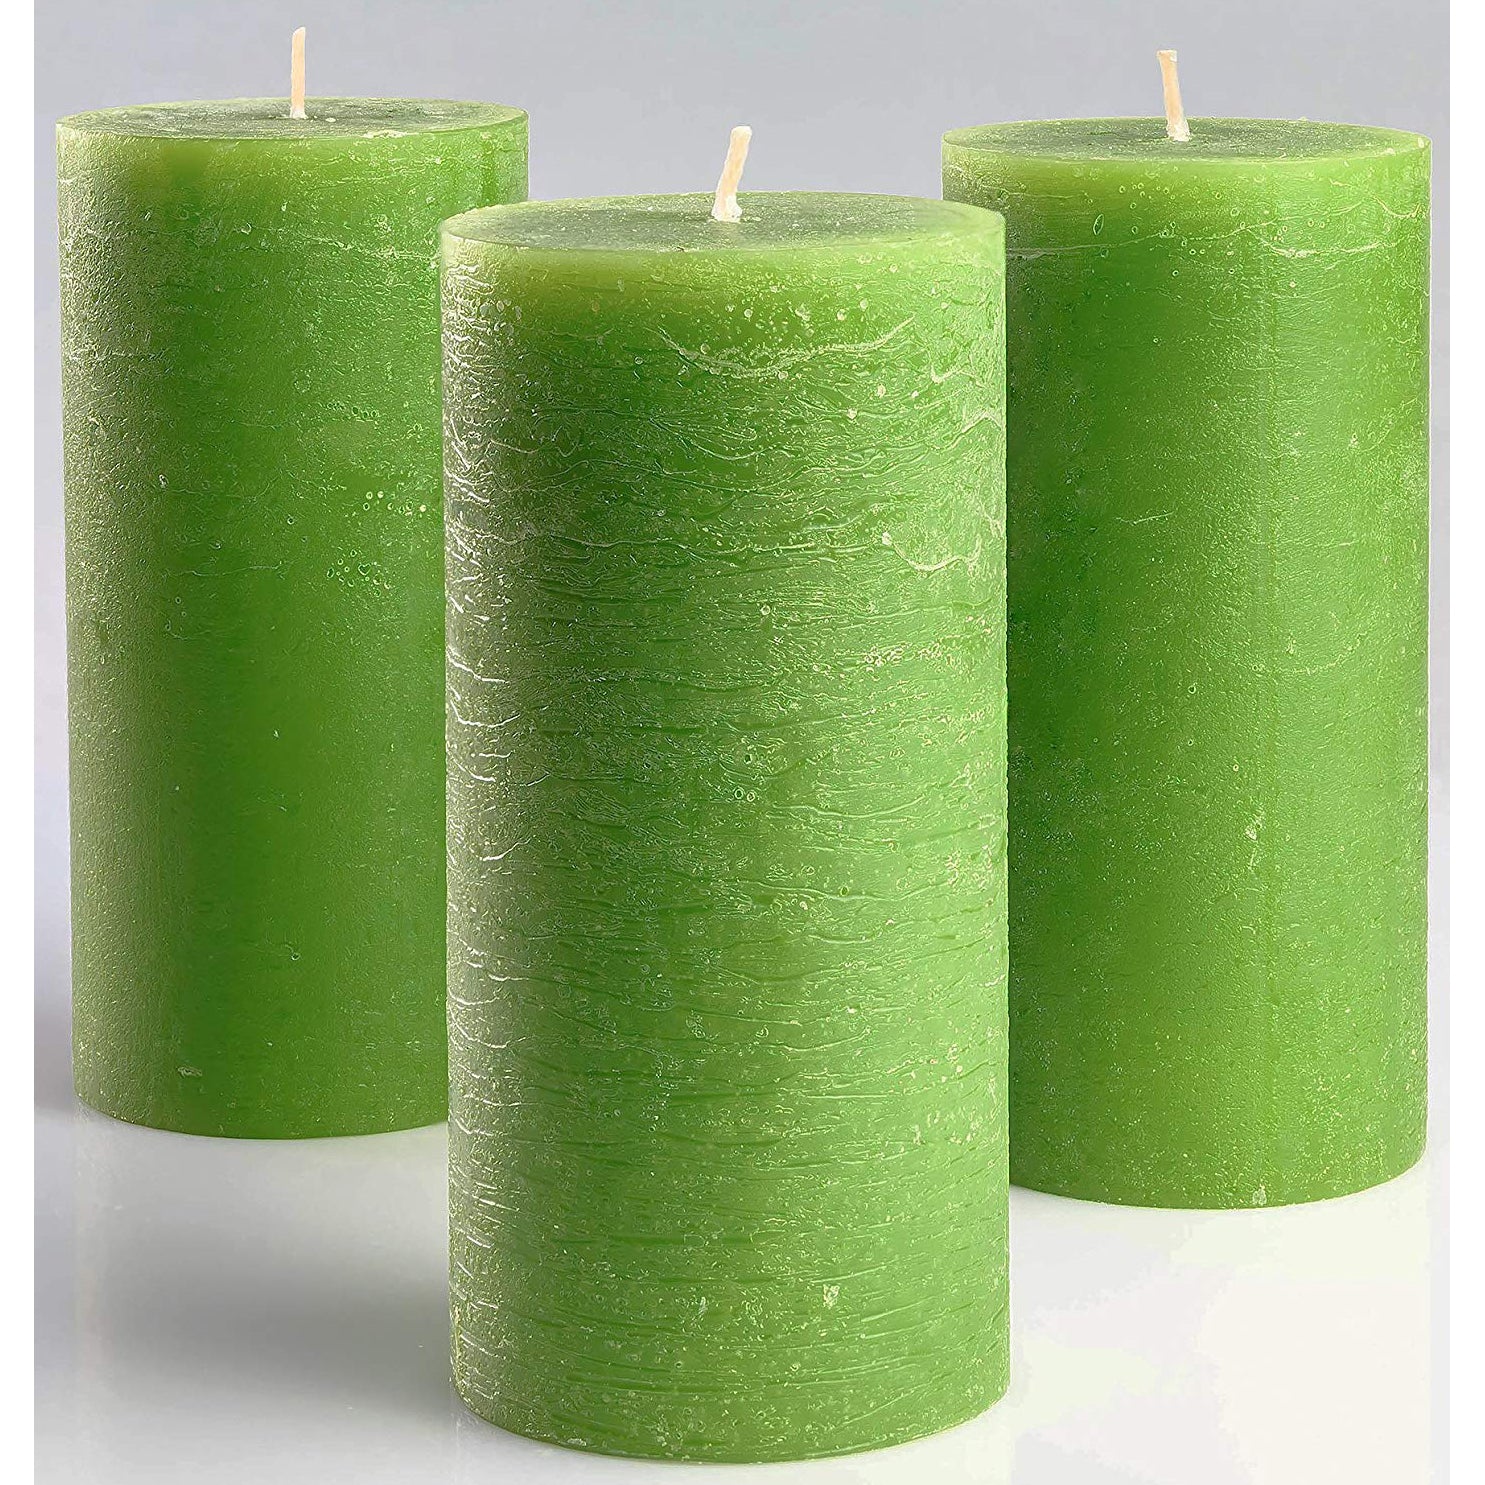 Soy wax Pillar candle set